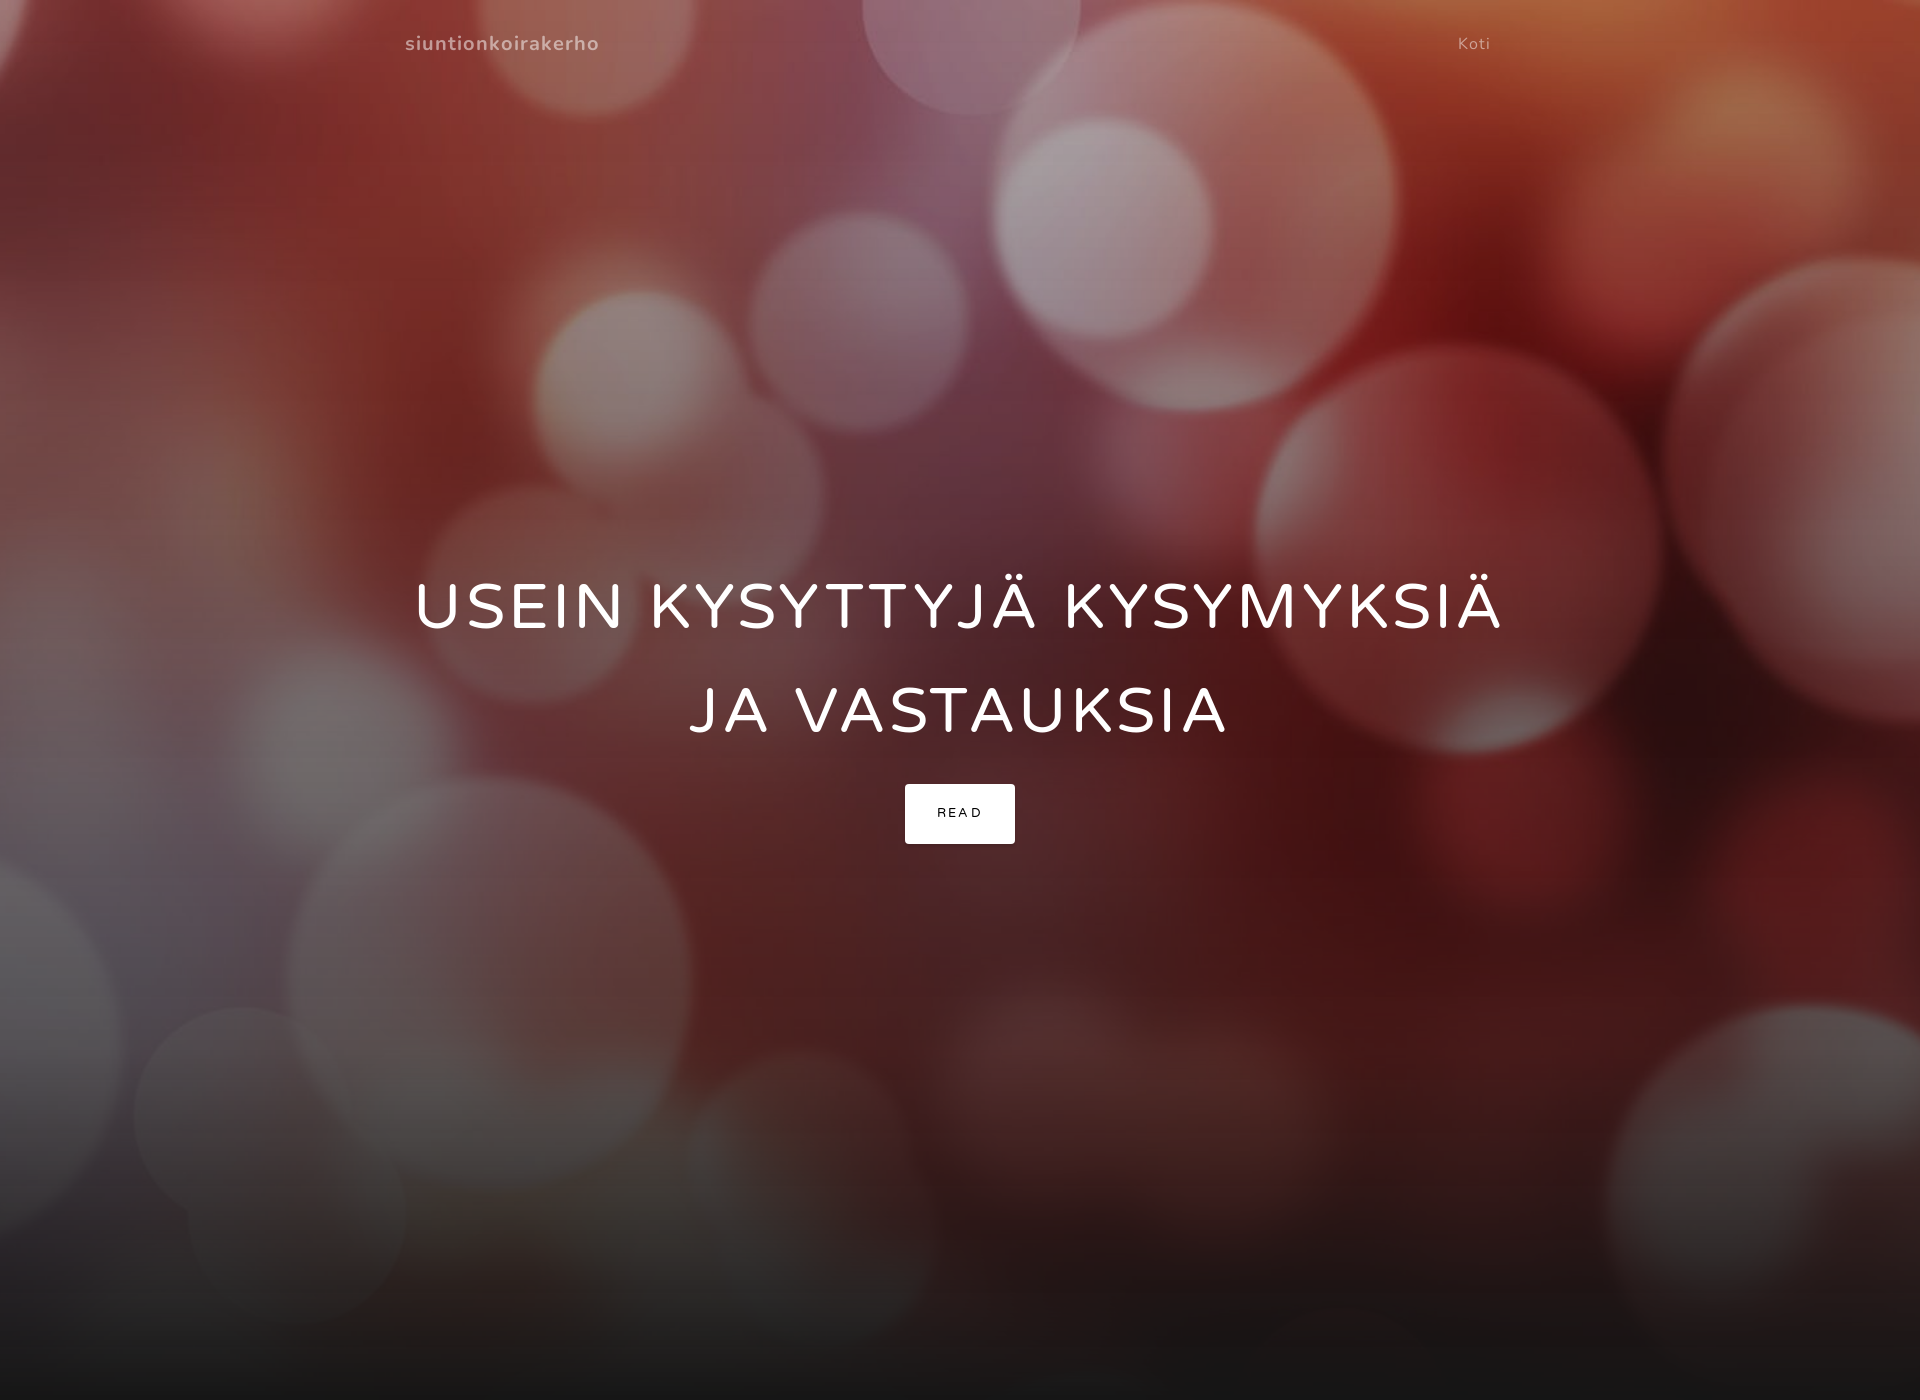 Screenshot for siuntionkoirakerho.fi